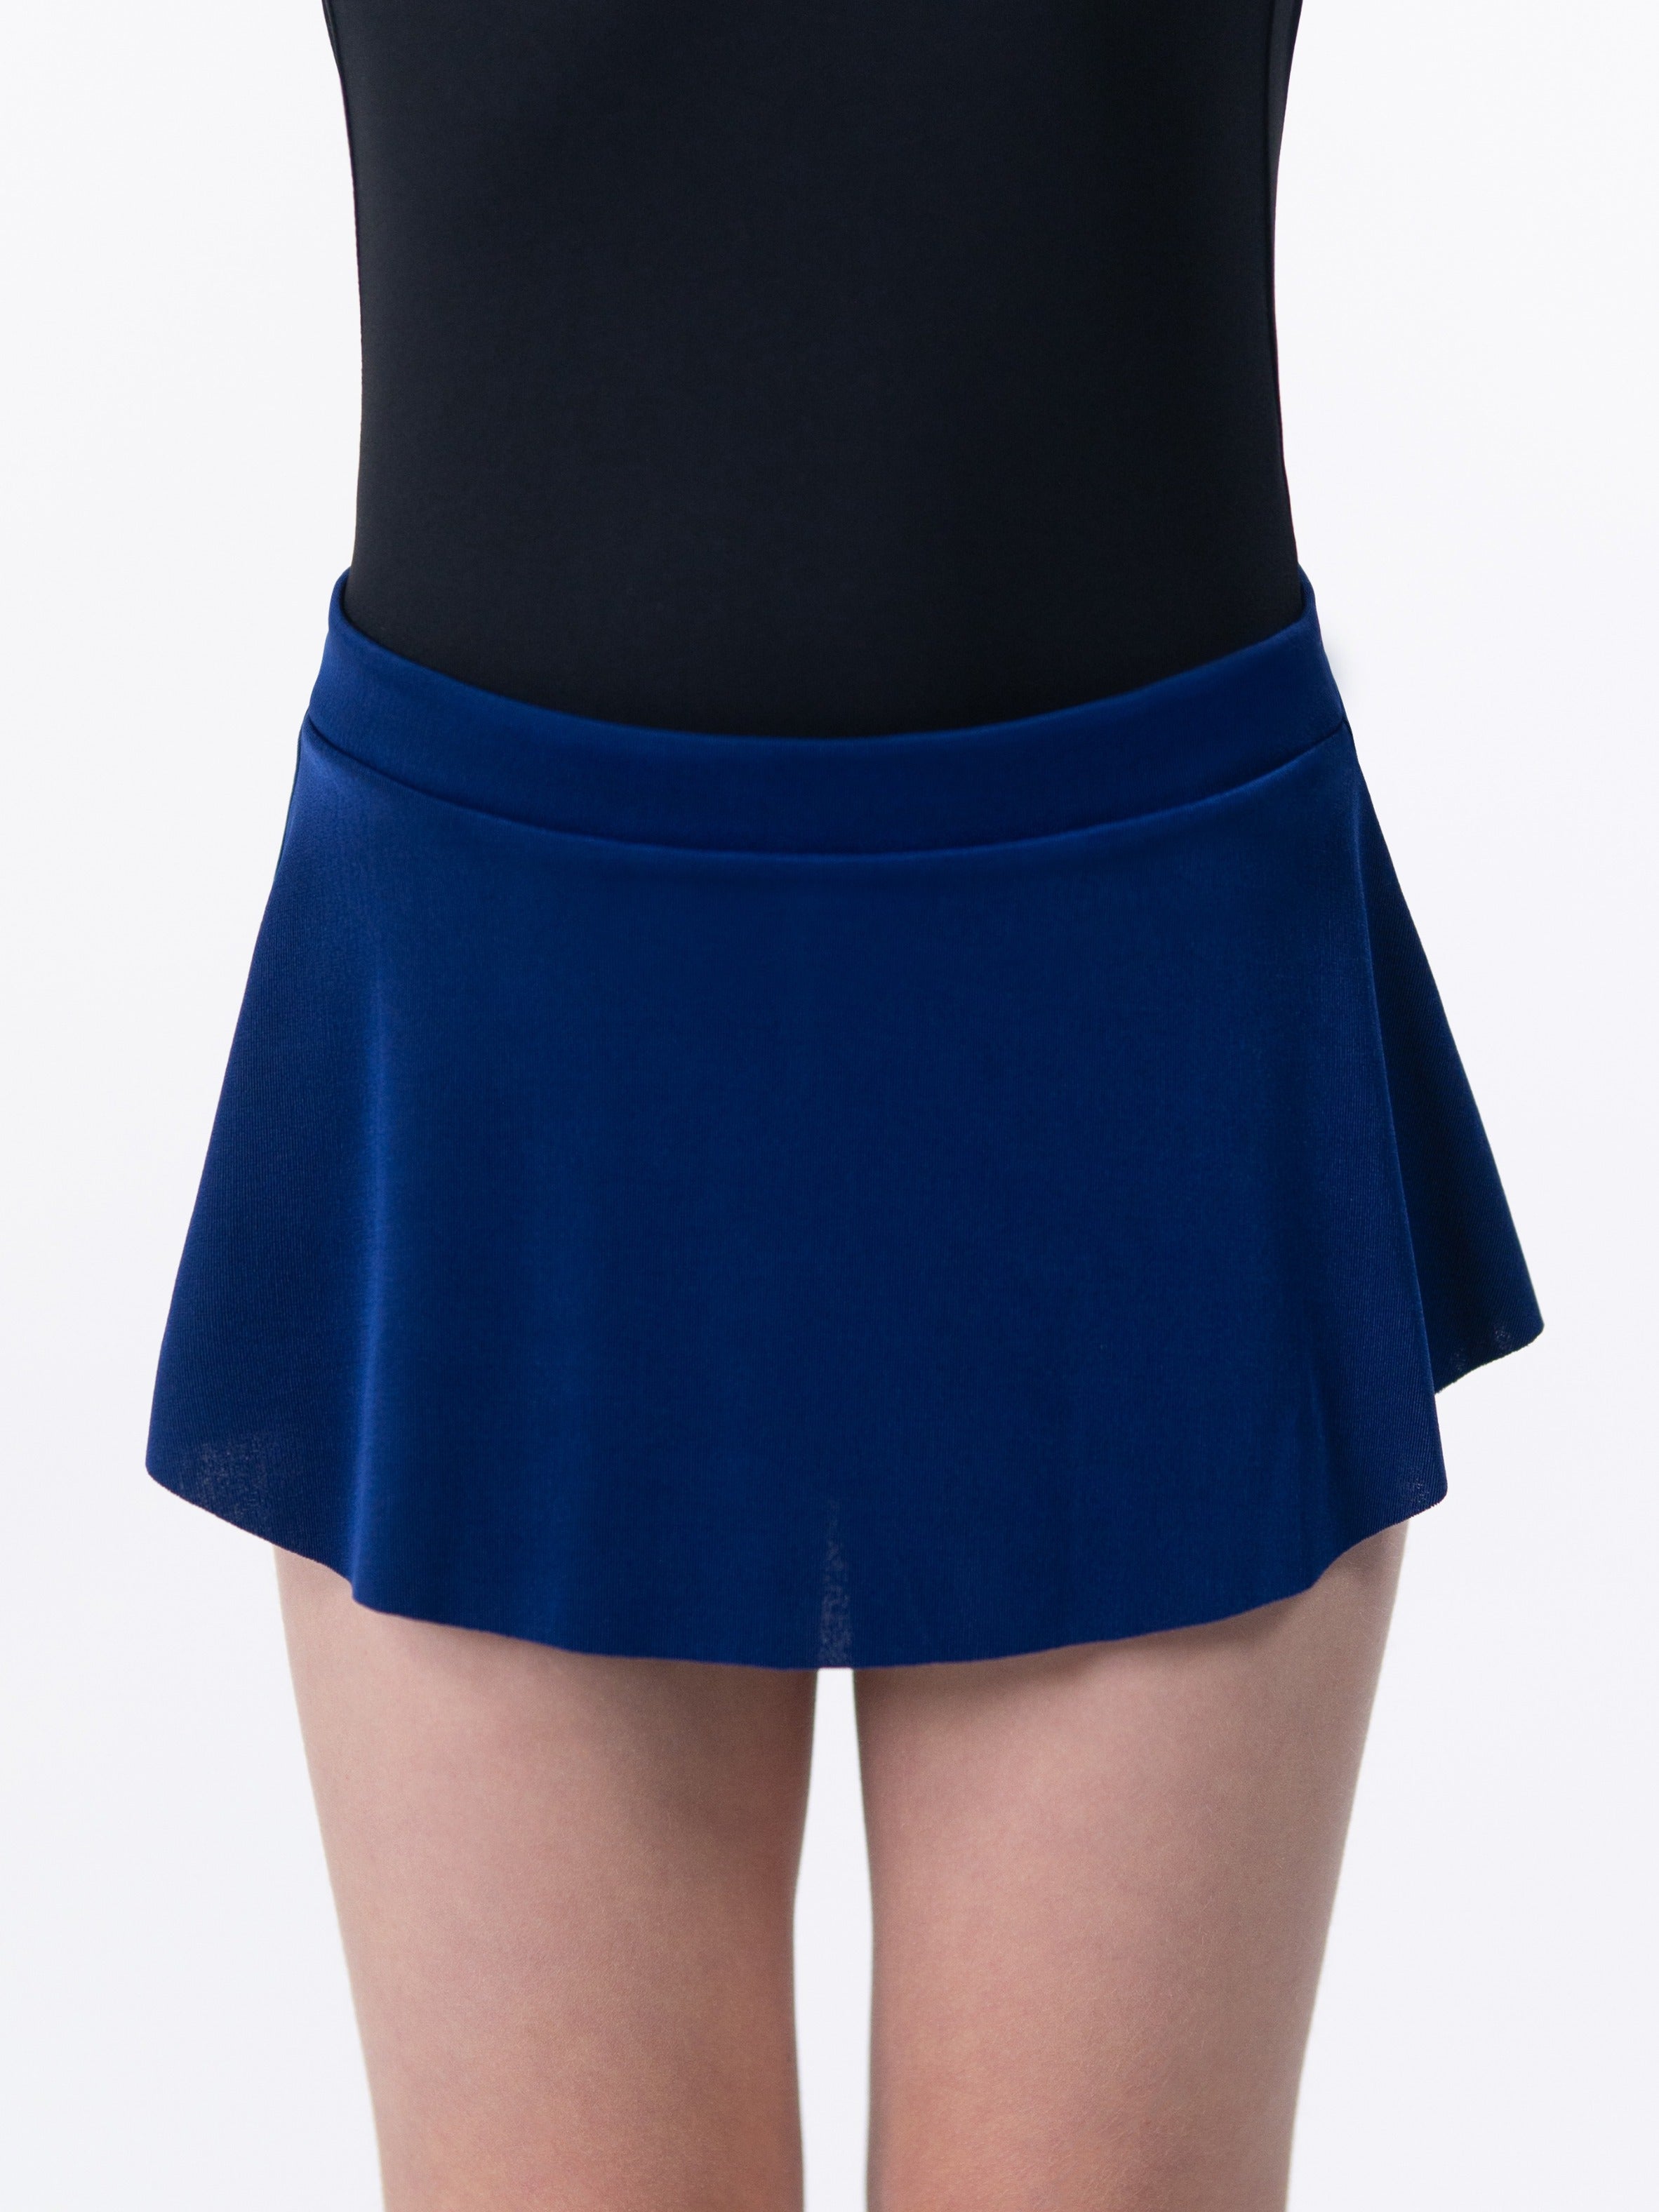 Suffolk Slinky – Child Low High Dance Skirt Pull-on 1006C